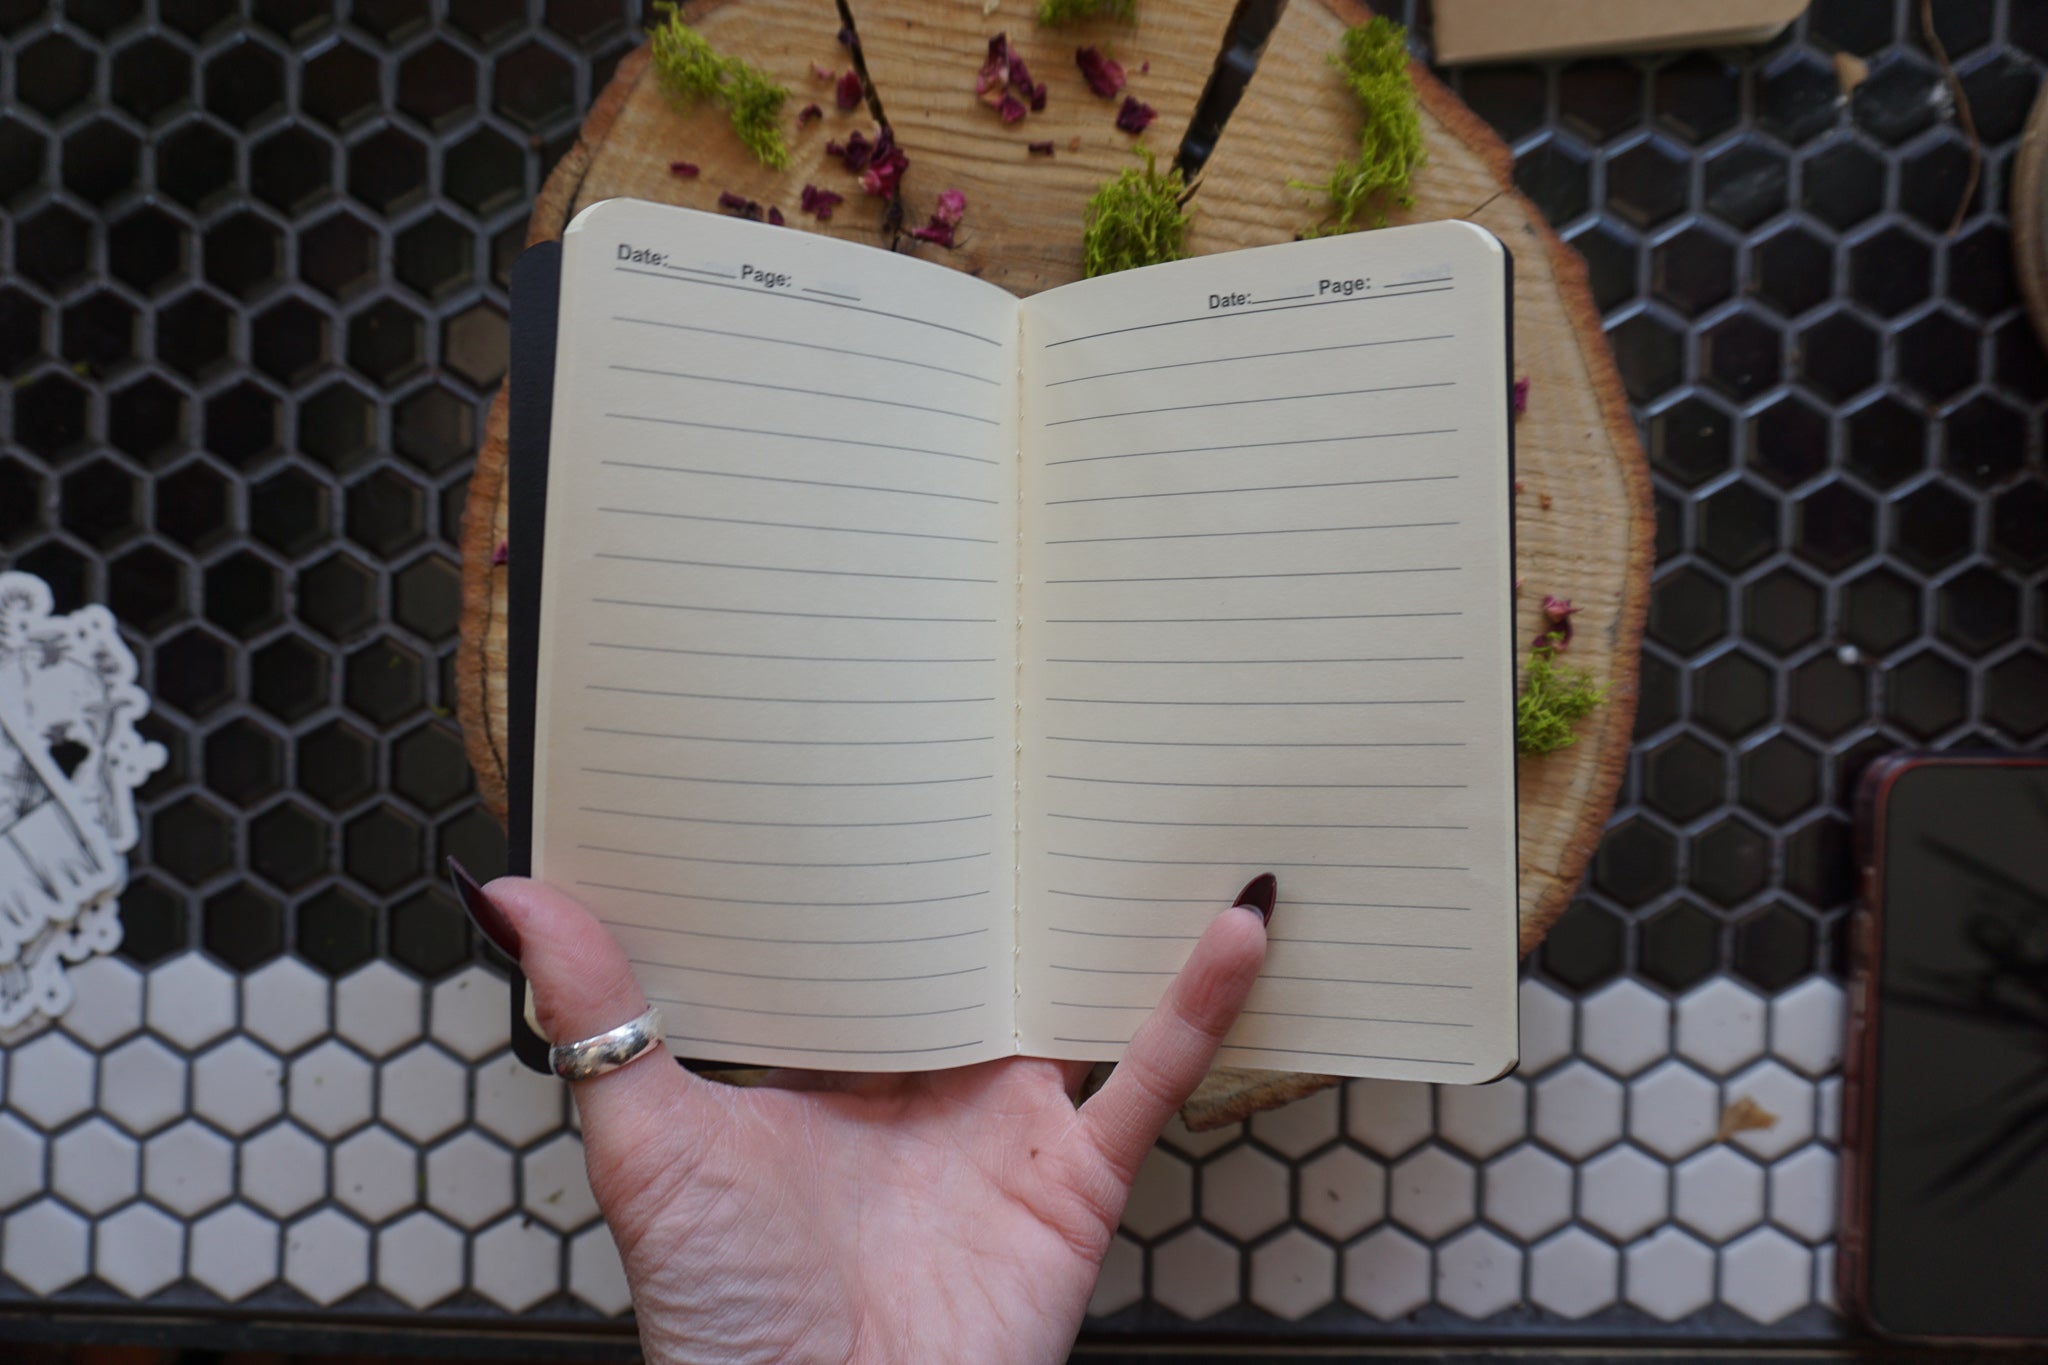 Mushroom Eye 1 Mini Notebook - Hand Printed